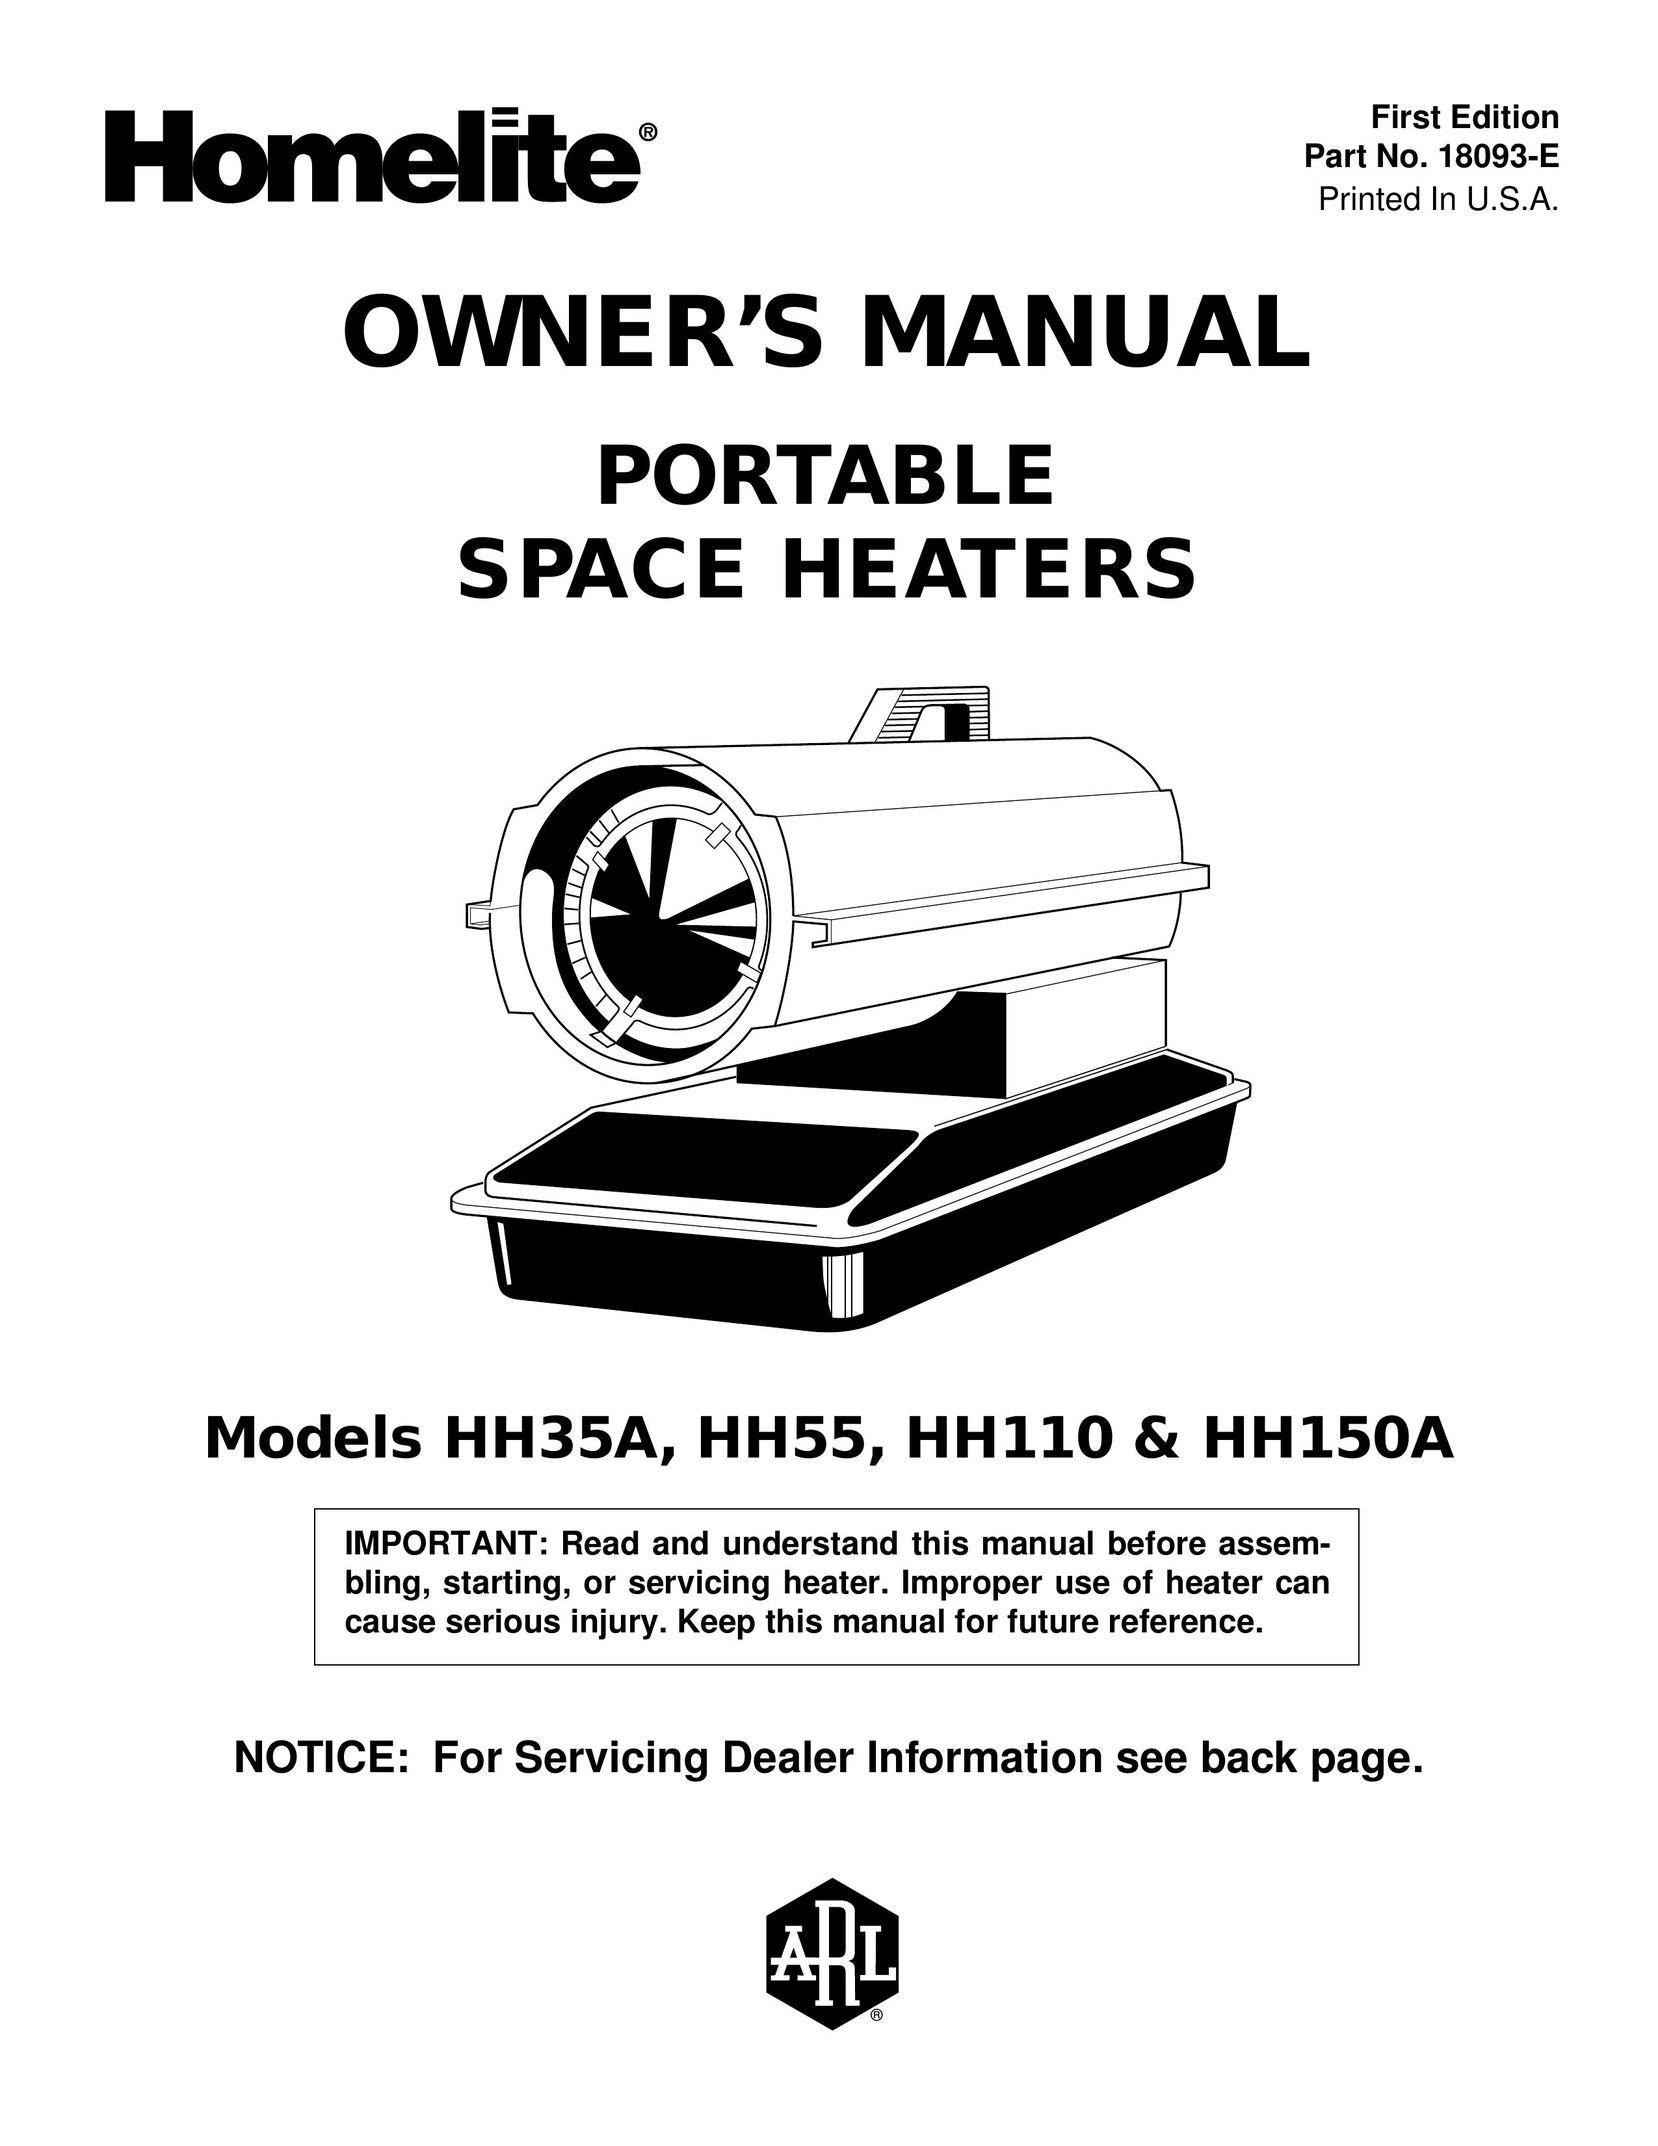 Homelite HH55 Electric Heater User Manual